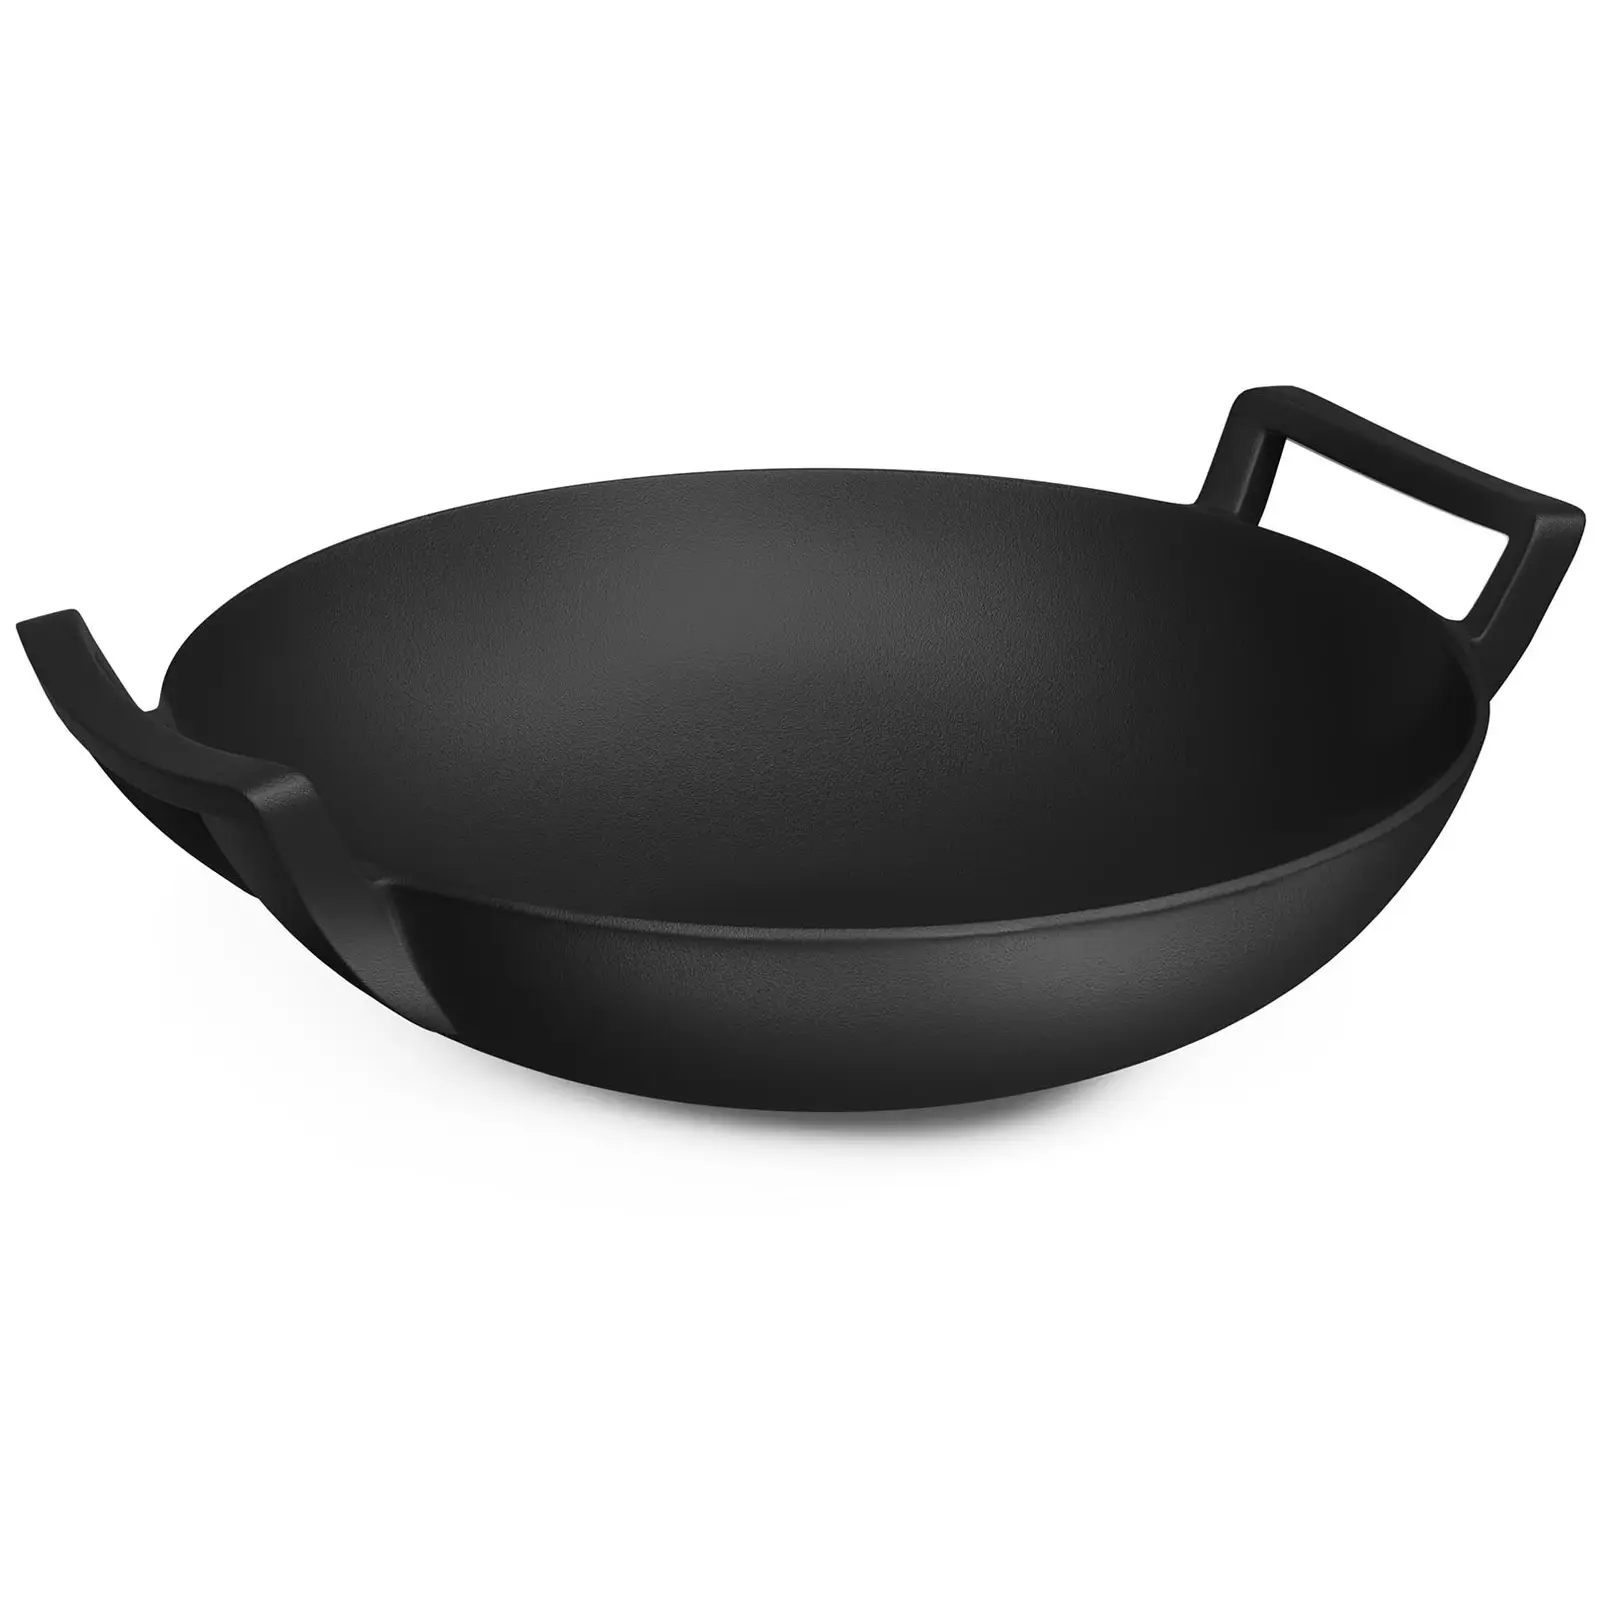 Litinová pánev wok - Ø 32 x 11 cm